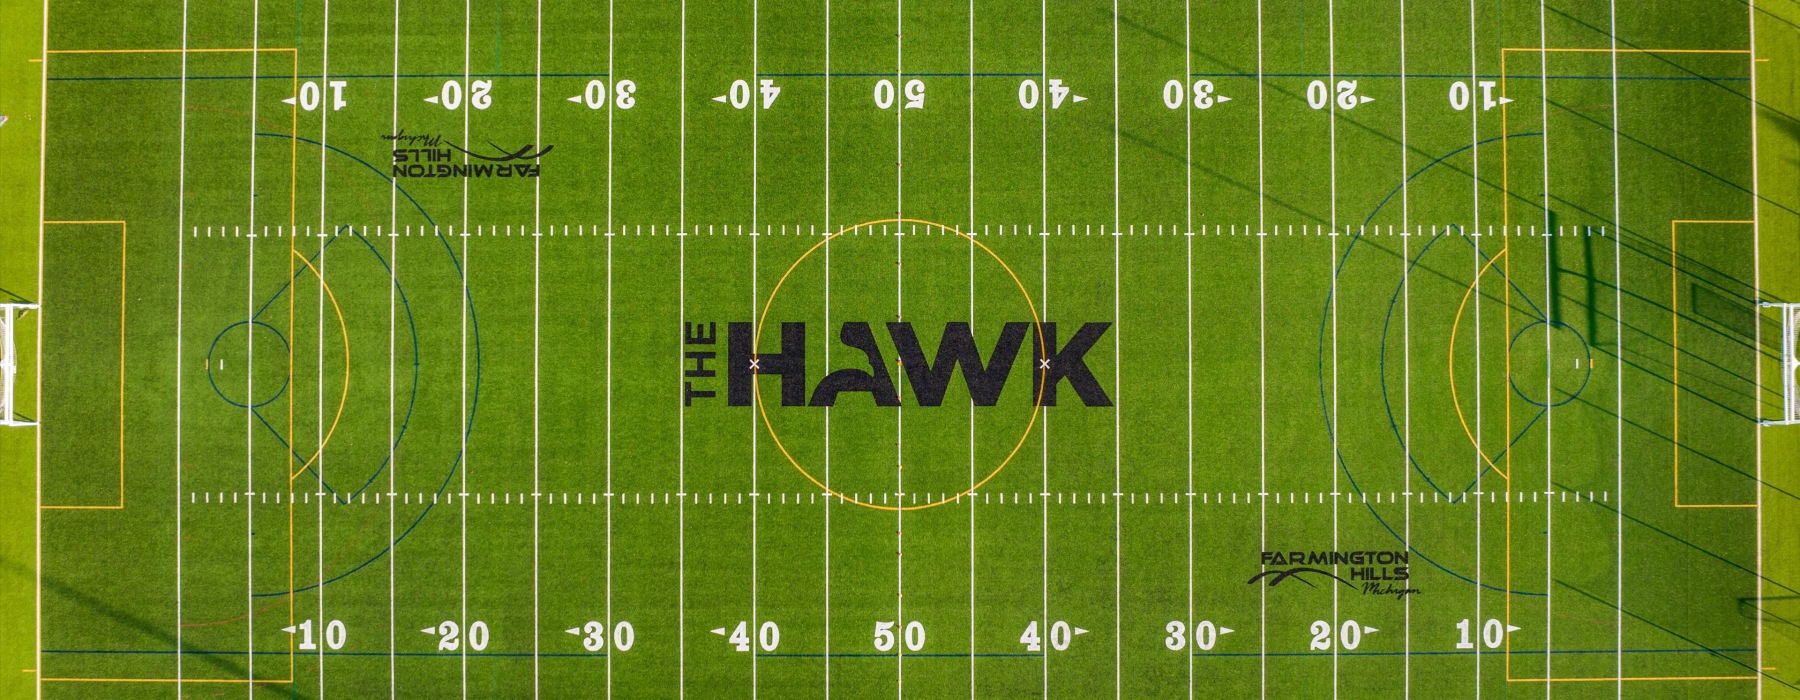 The Hawk Field 